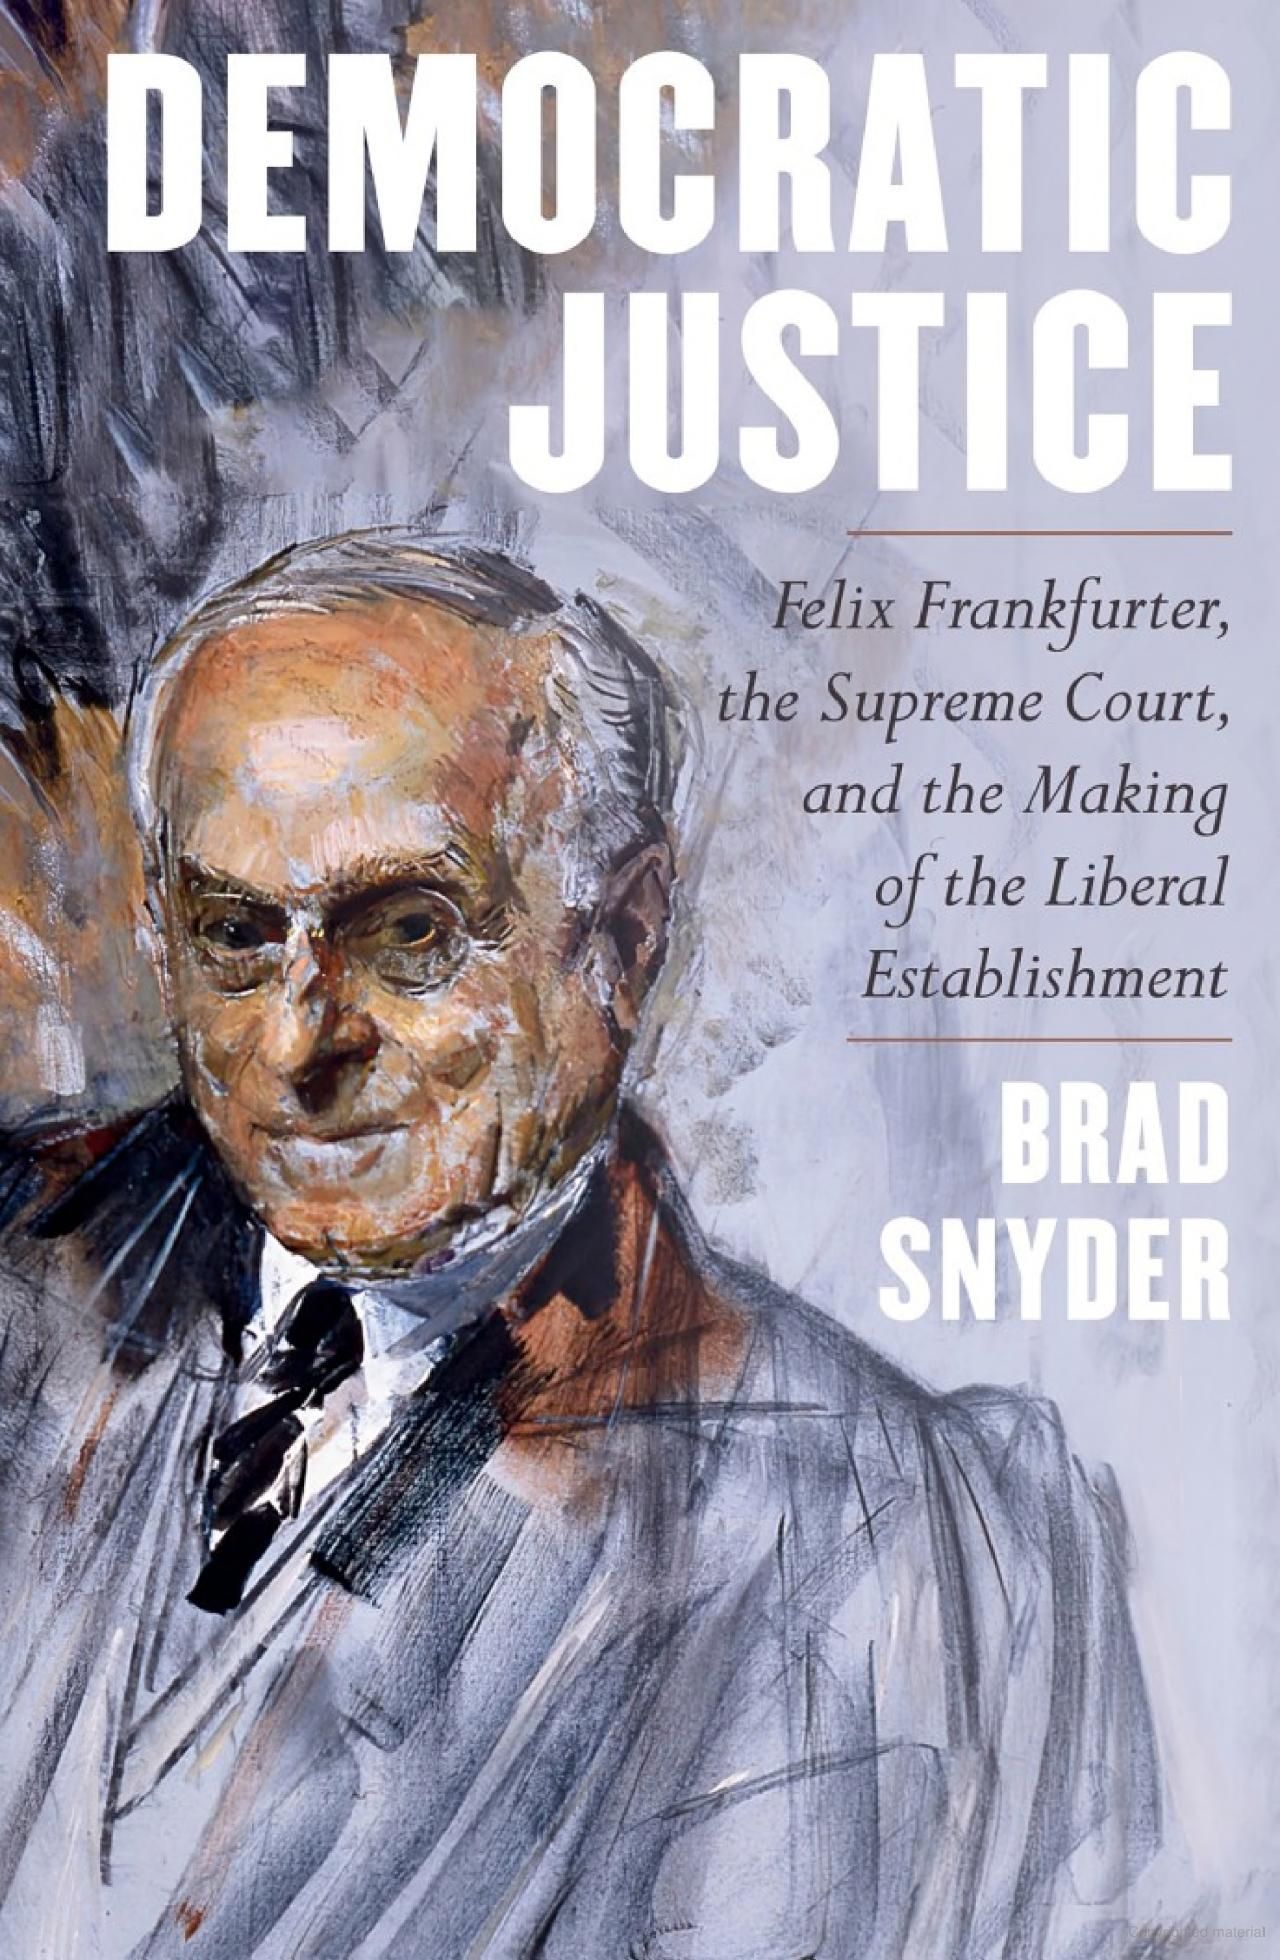 The Many Faces of Felix Frankfurter: On Brad Snyder’s “Democratic Justice”